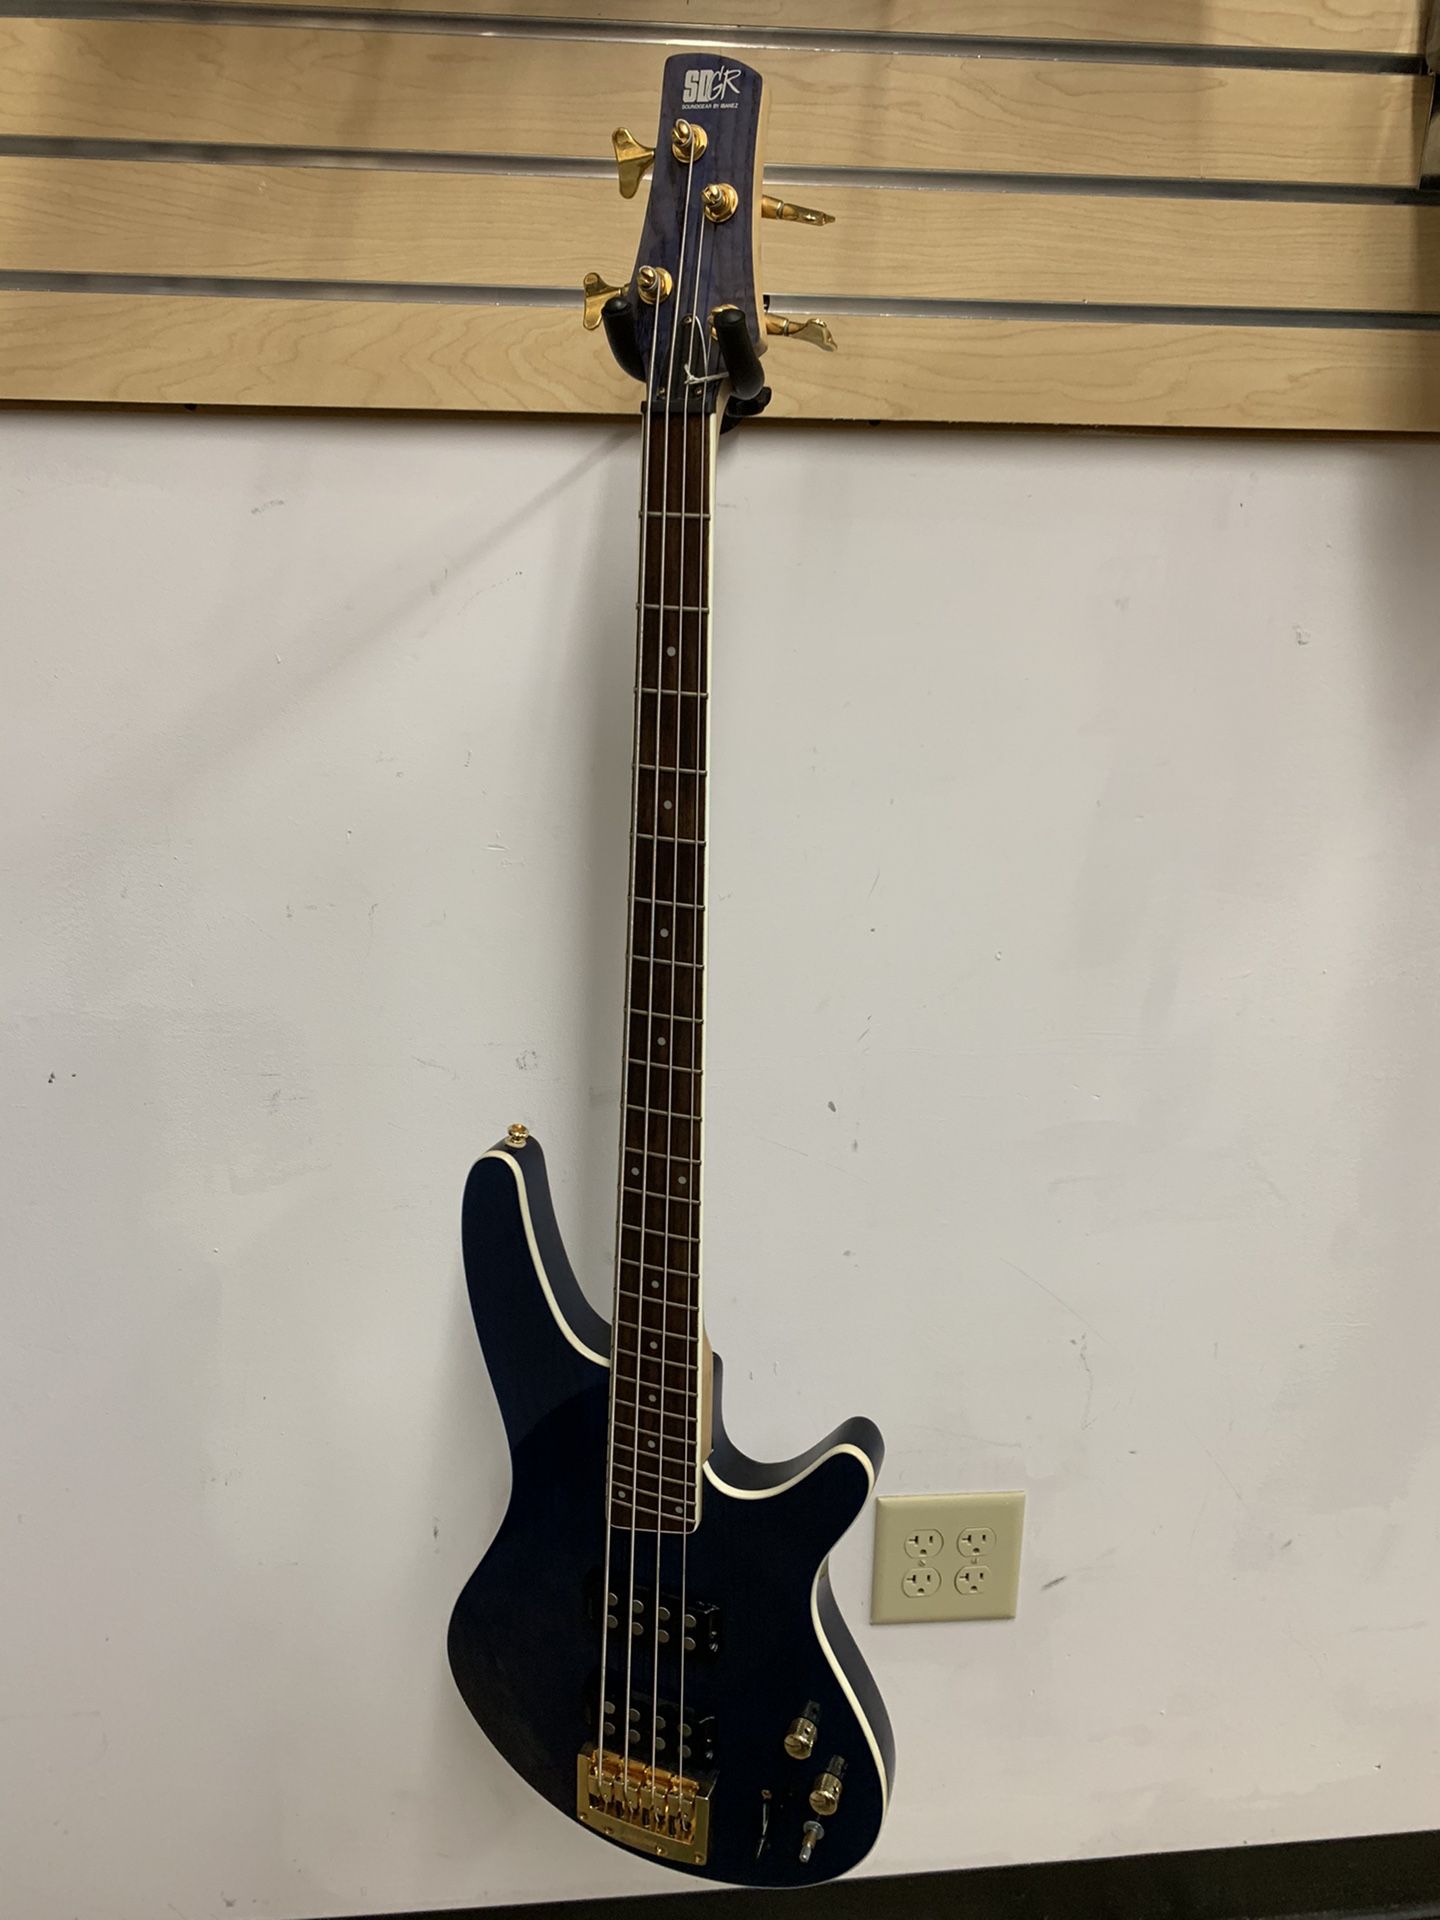 Ibanez model SRX650 bass guitar electric 4 string